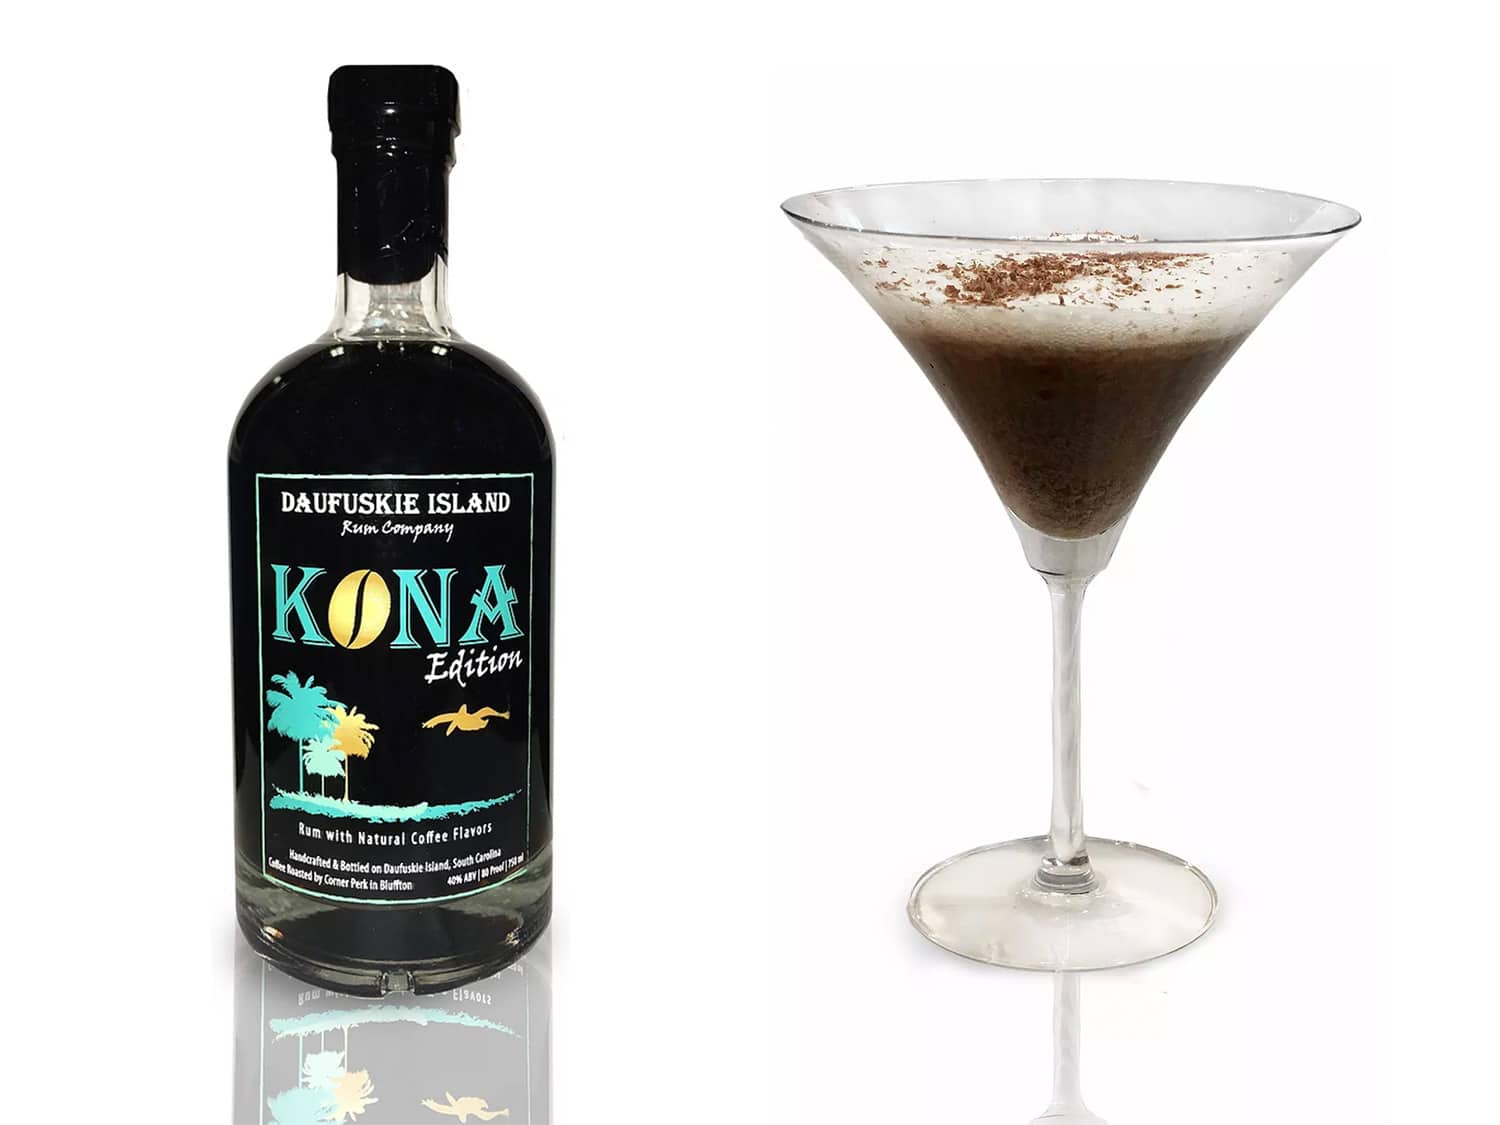 A bottle of Kona liquor next to a martini glass.